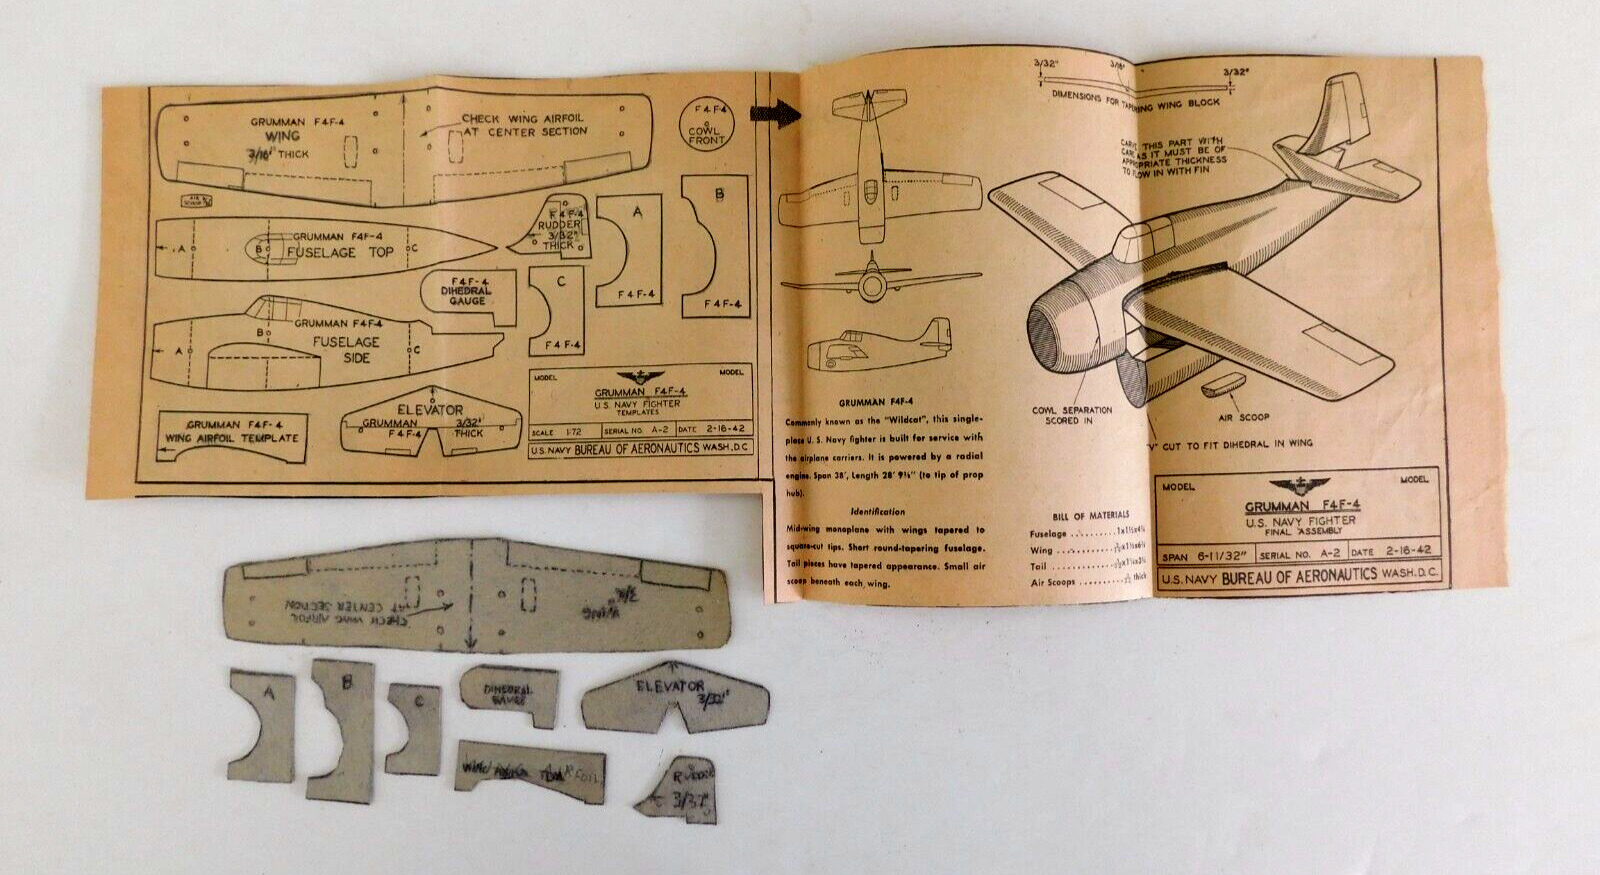 Grumman F4F-4 Wildcat Newspaper plans for 1:72 model cardboard 1942, no fuselage